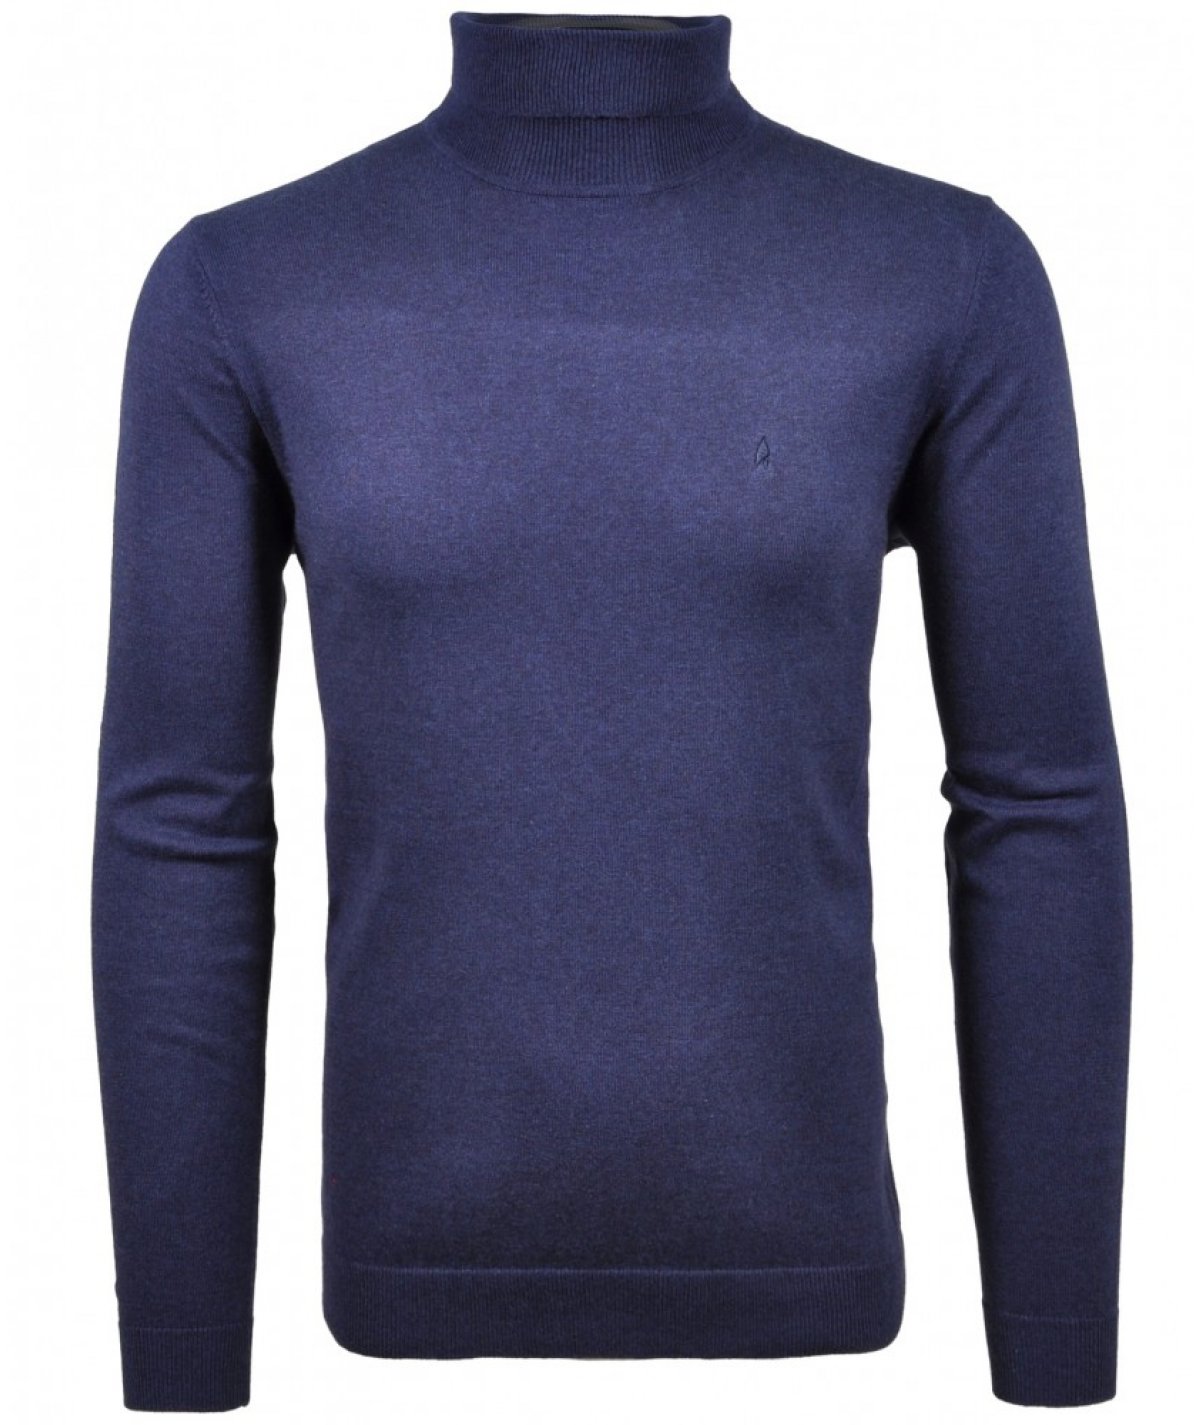 RAGMAN plus sizes Sweater with turtlenec